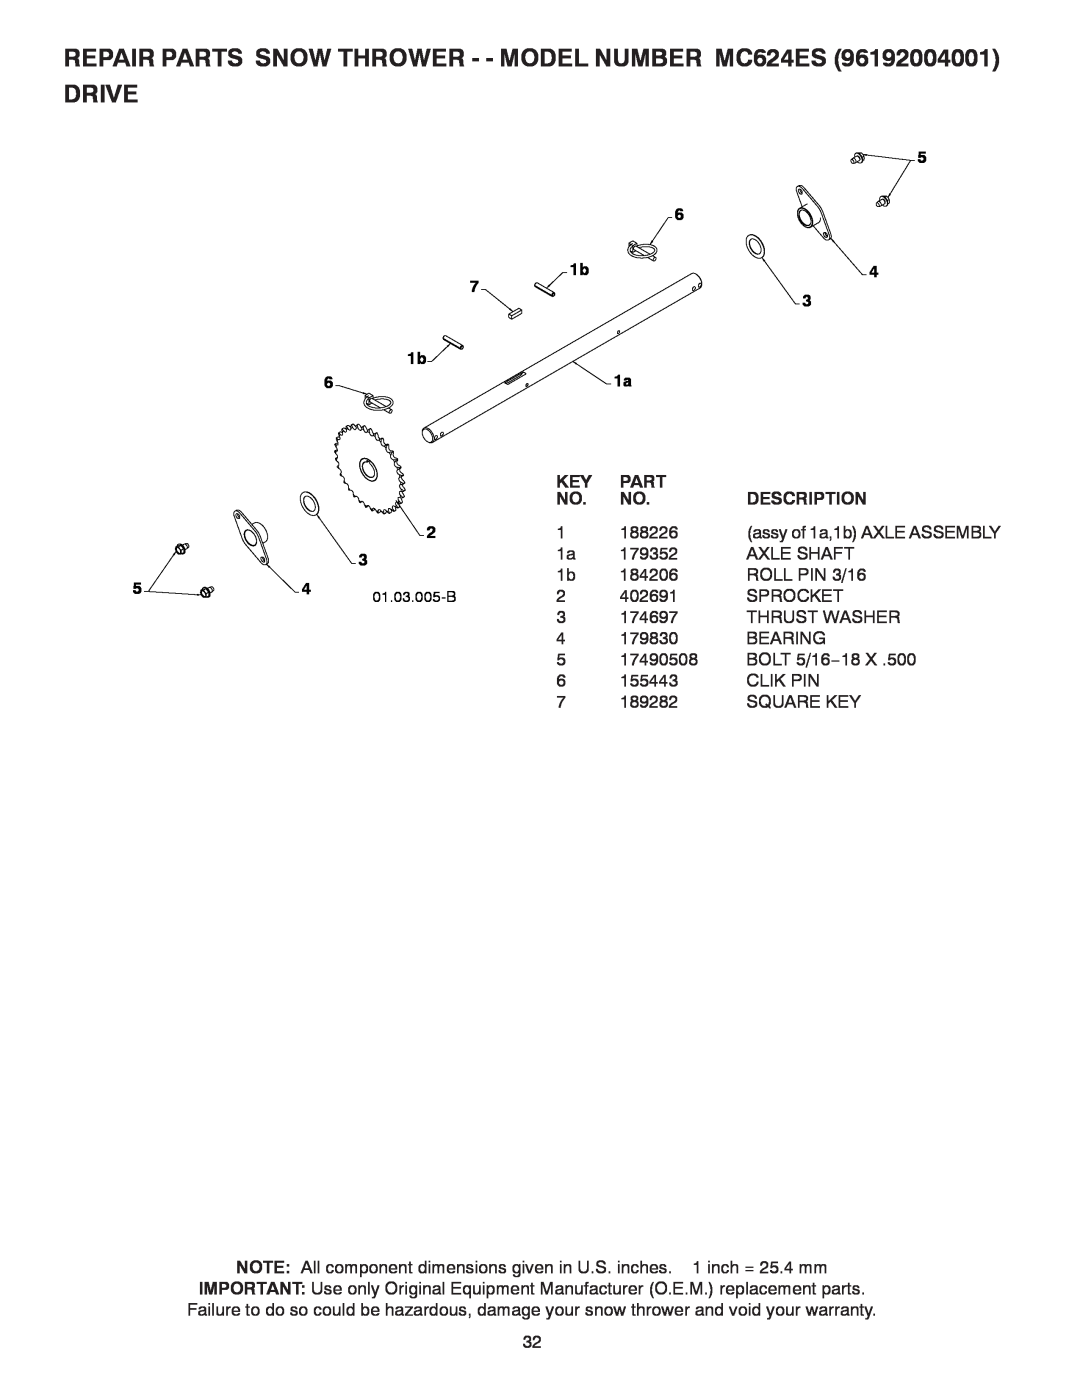 McCulloch 96192004001 owner manual REPAIR PARTS SNOW THROWER - - MODEL NUMBER MC624ES DRIVE, Part, Description, 01.03.005-B 